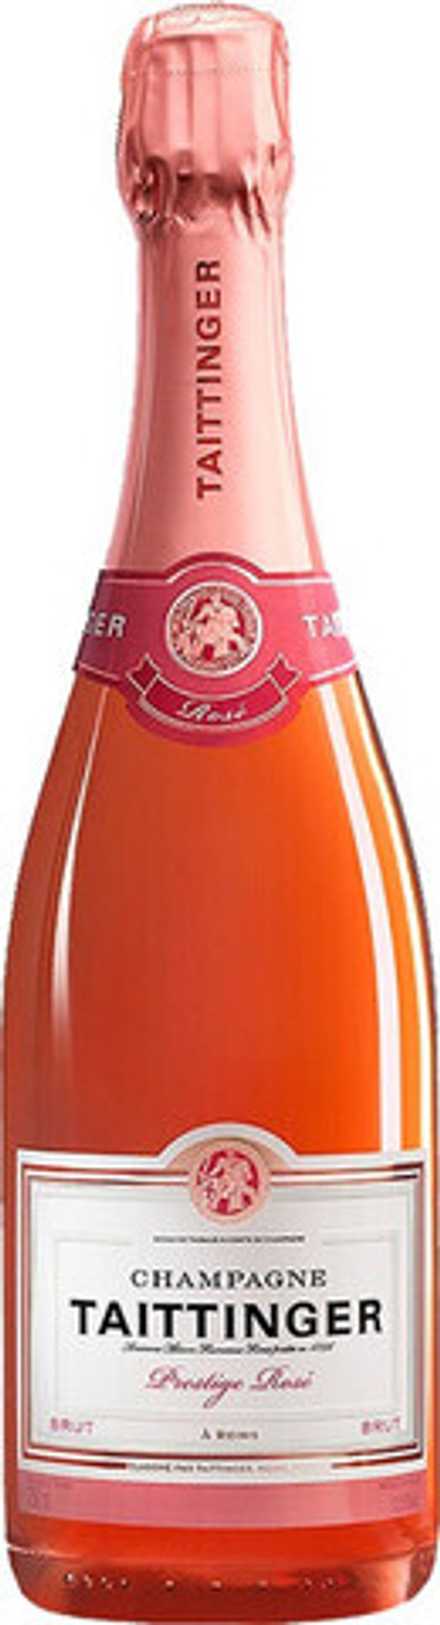 Шампанское Taittinger Prestige Rose Brut, 0,75 л.